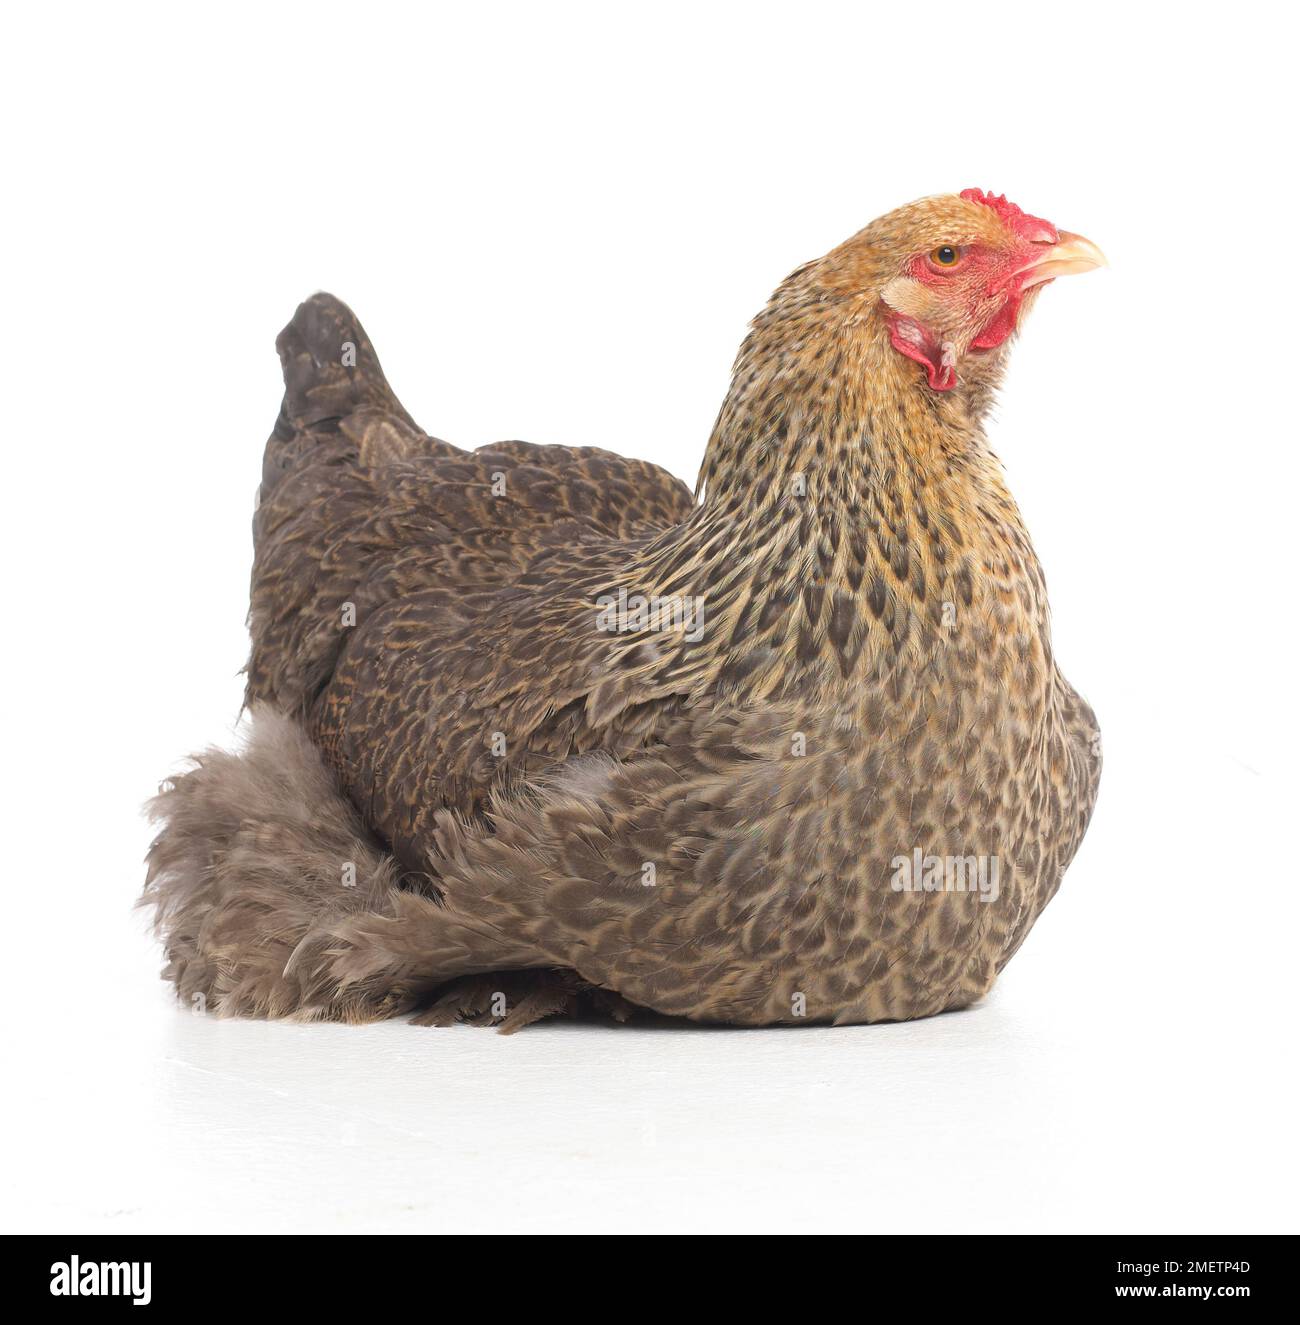 Silver Laced Brahma Chicken Scratching Ground Stock Photo